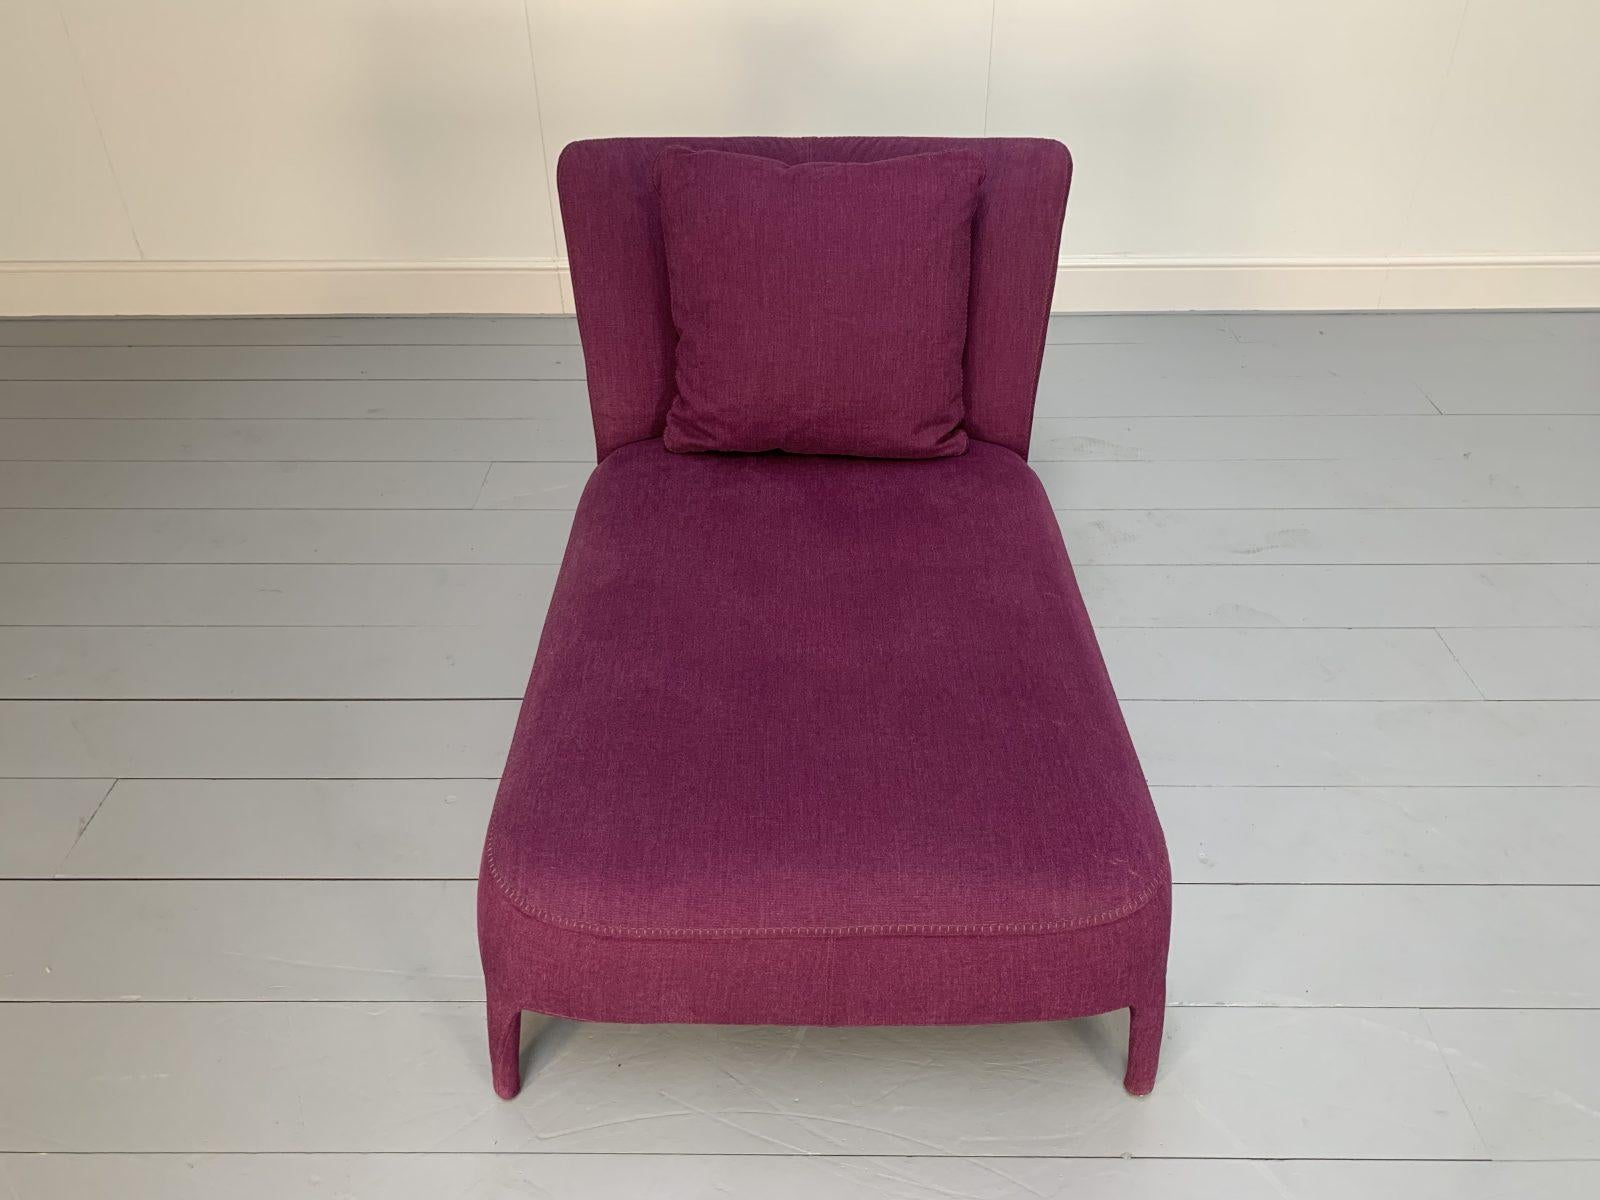 Contemporary B&B Italia “Febo” Chaise Lounge Sofa in Violet “Enia” Chenille For Sale